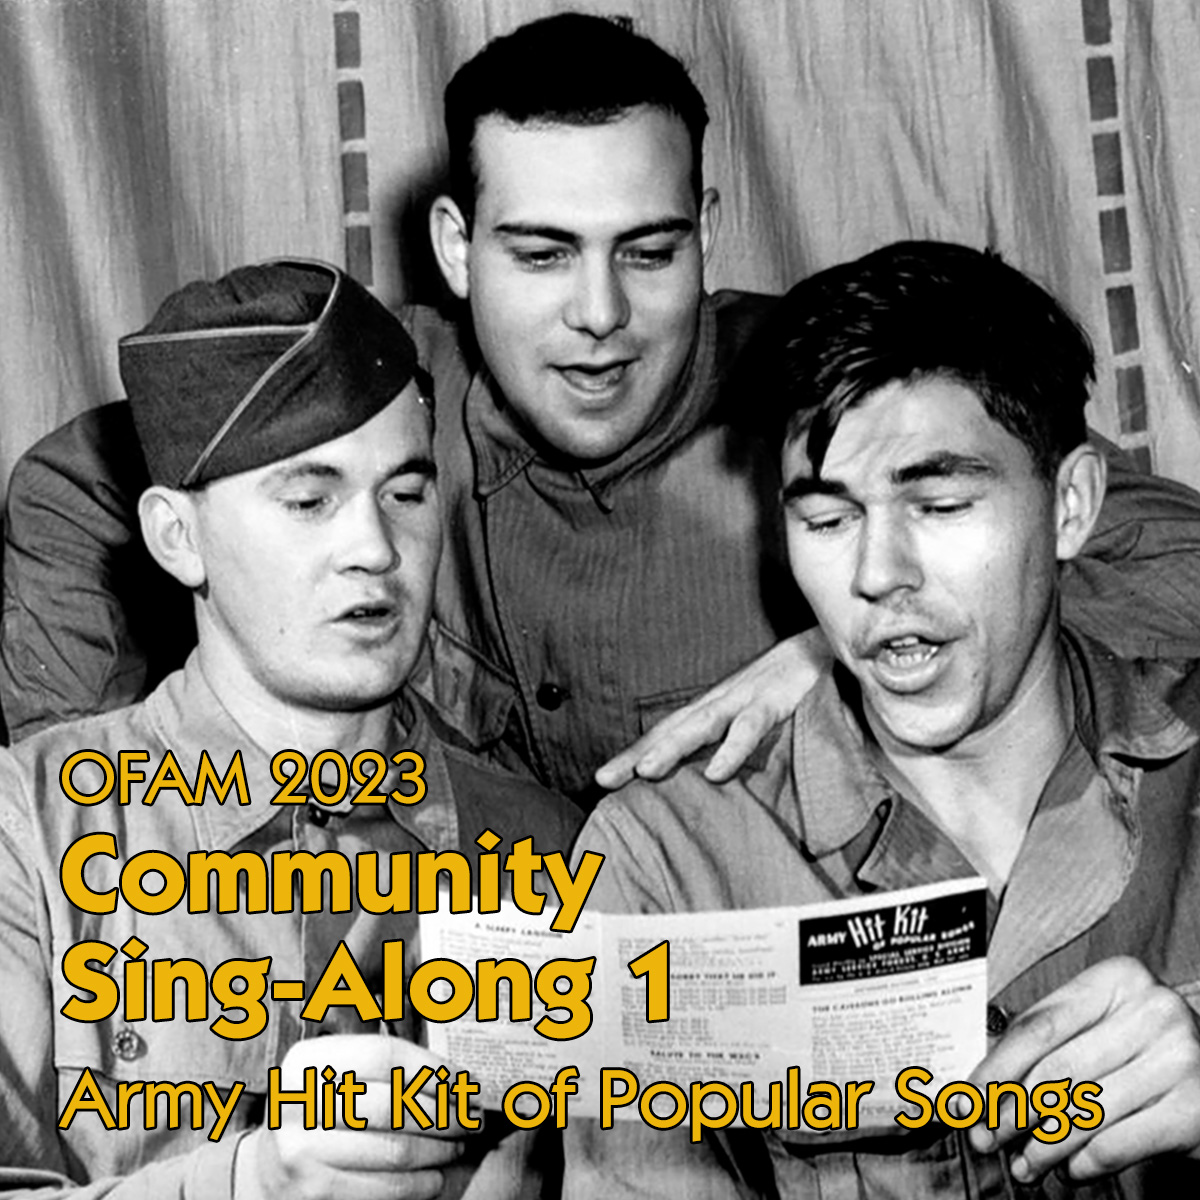 Sing-Along 1 - Army Hit Kit of Popular Songs